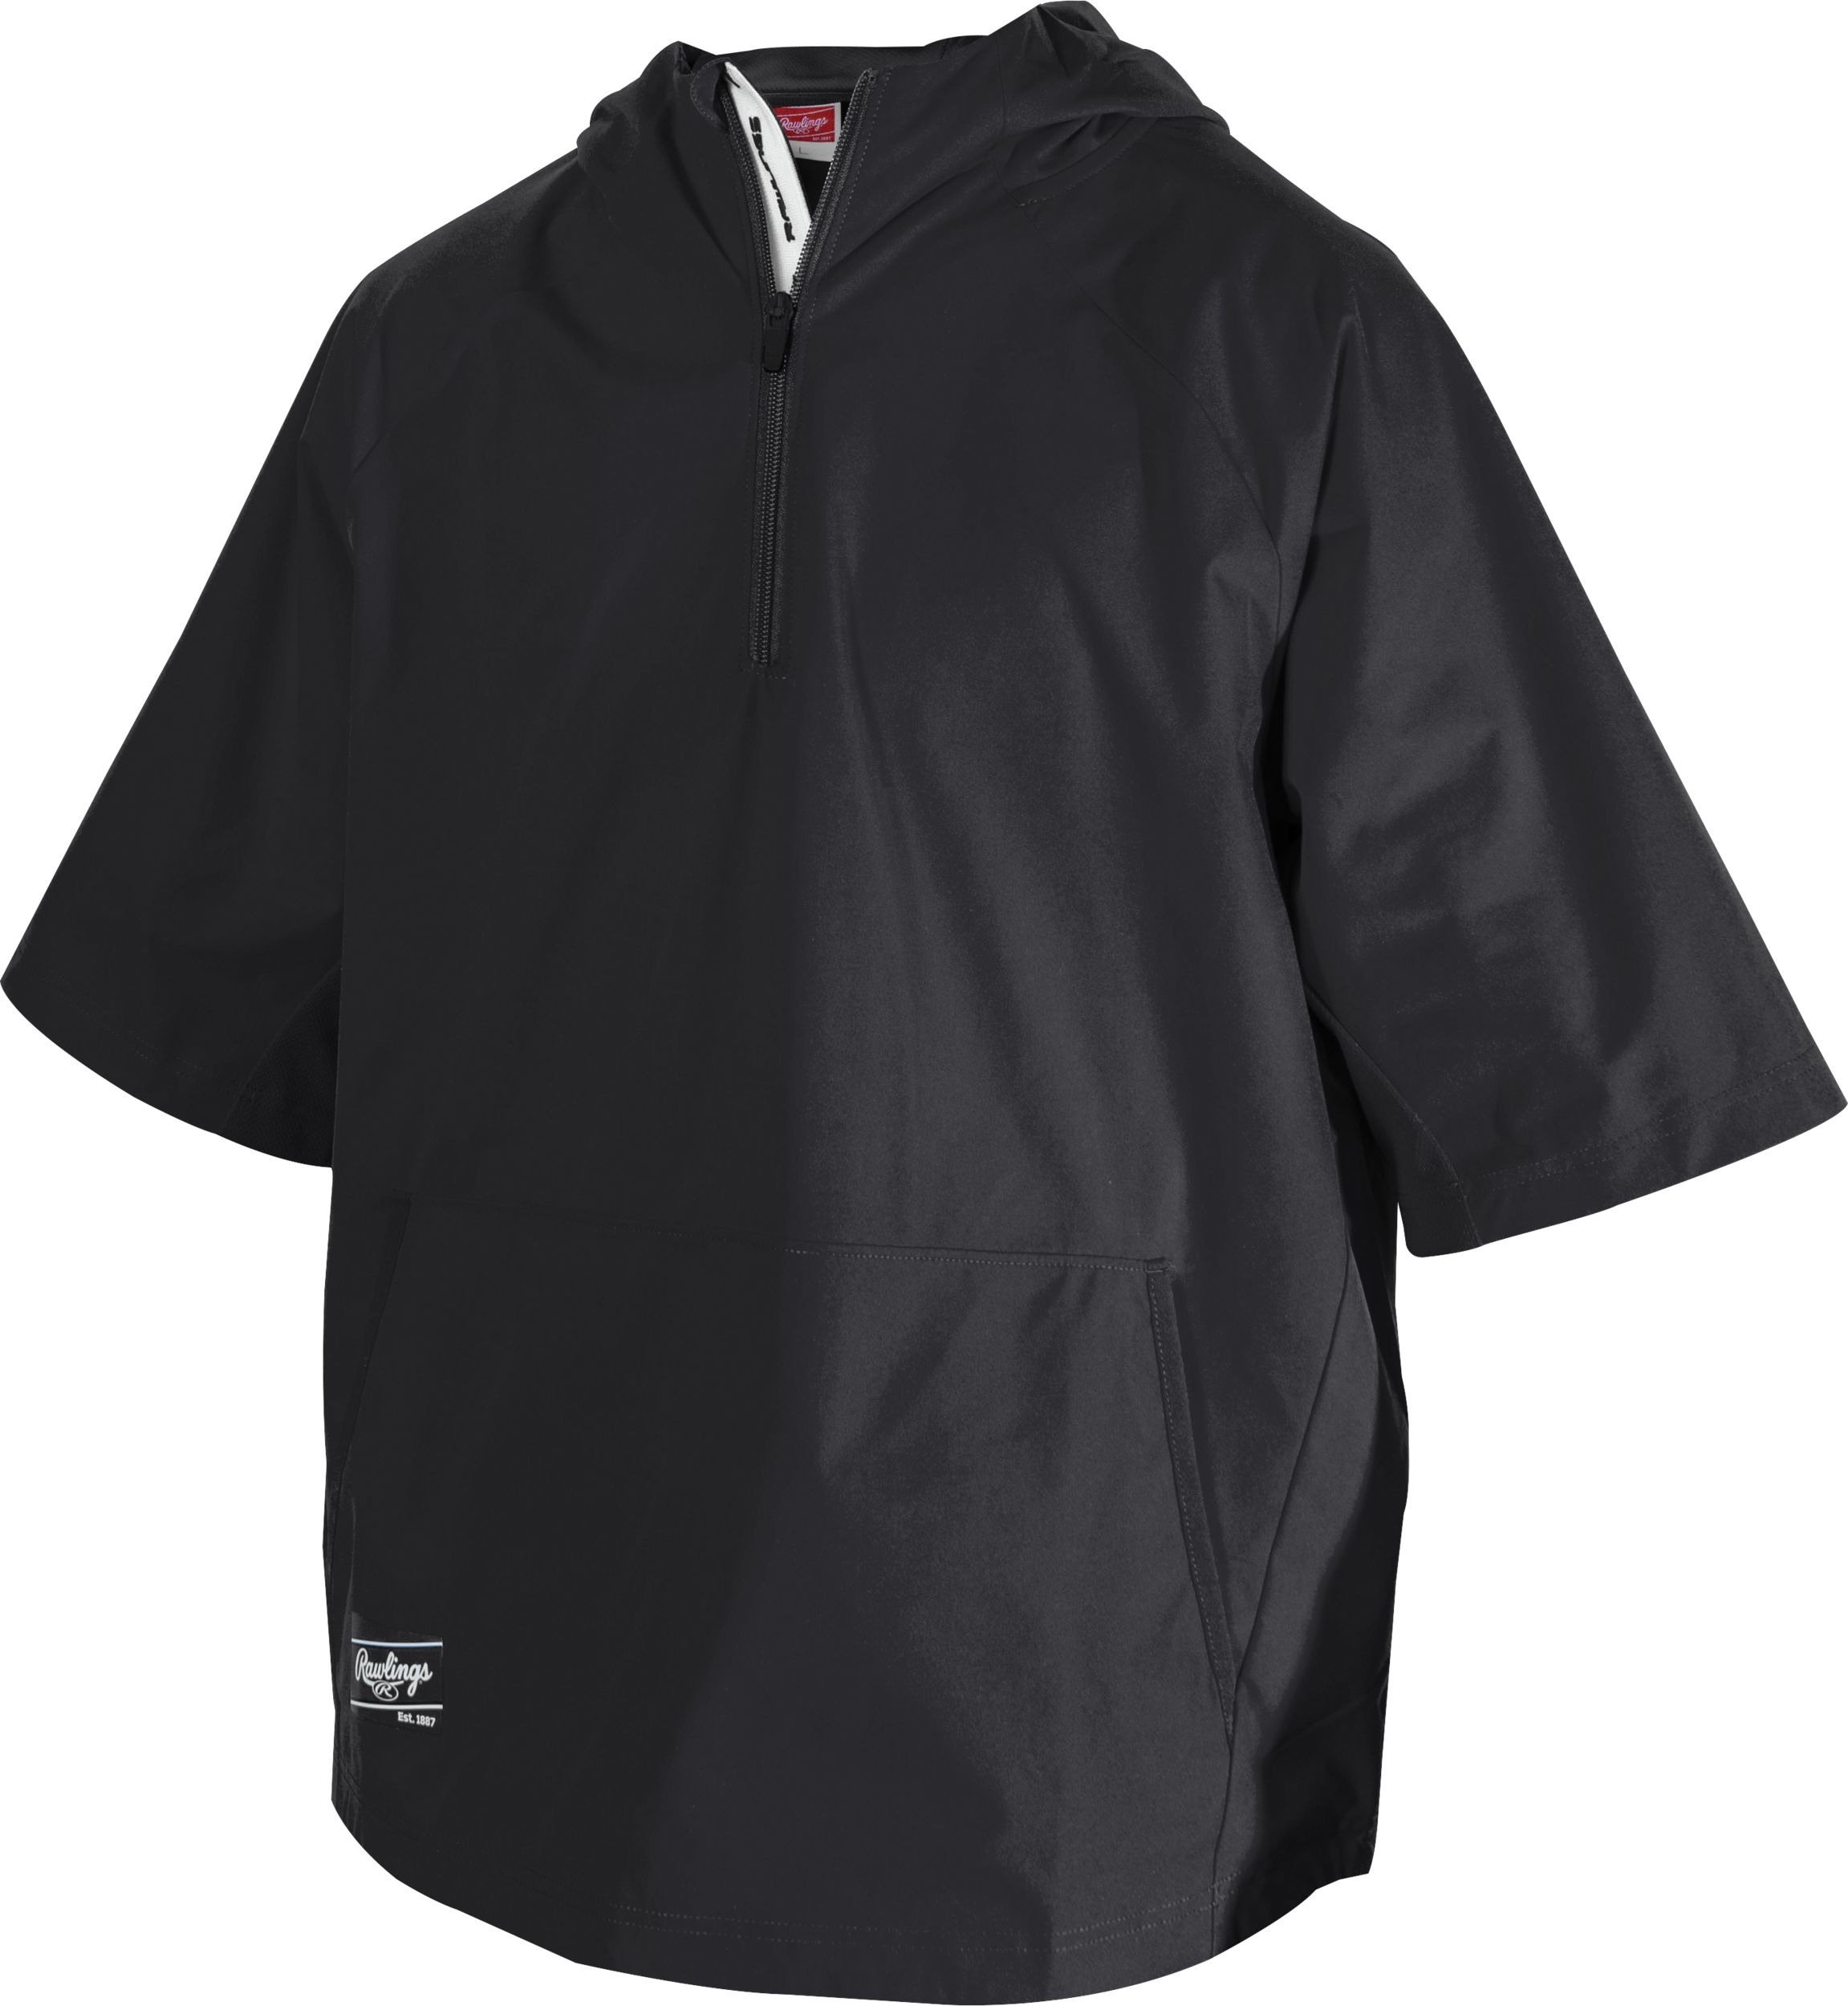 Rawlings Colour Sync Baseball Short Sleeve Jacket | SportChek